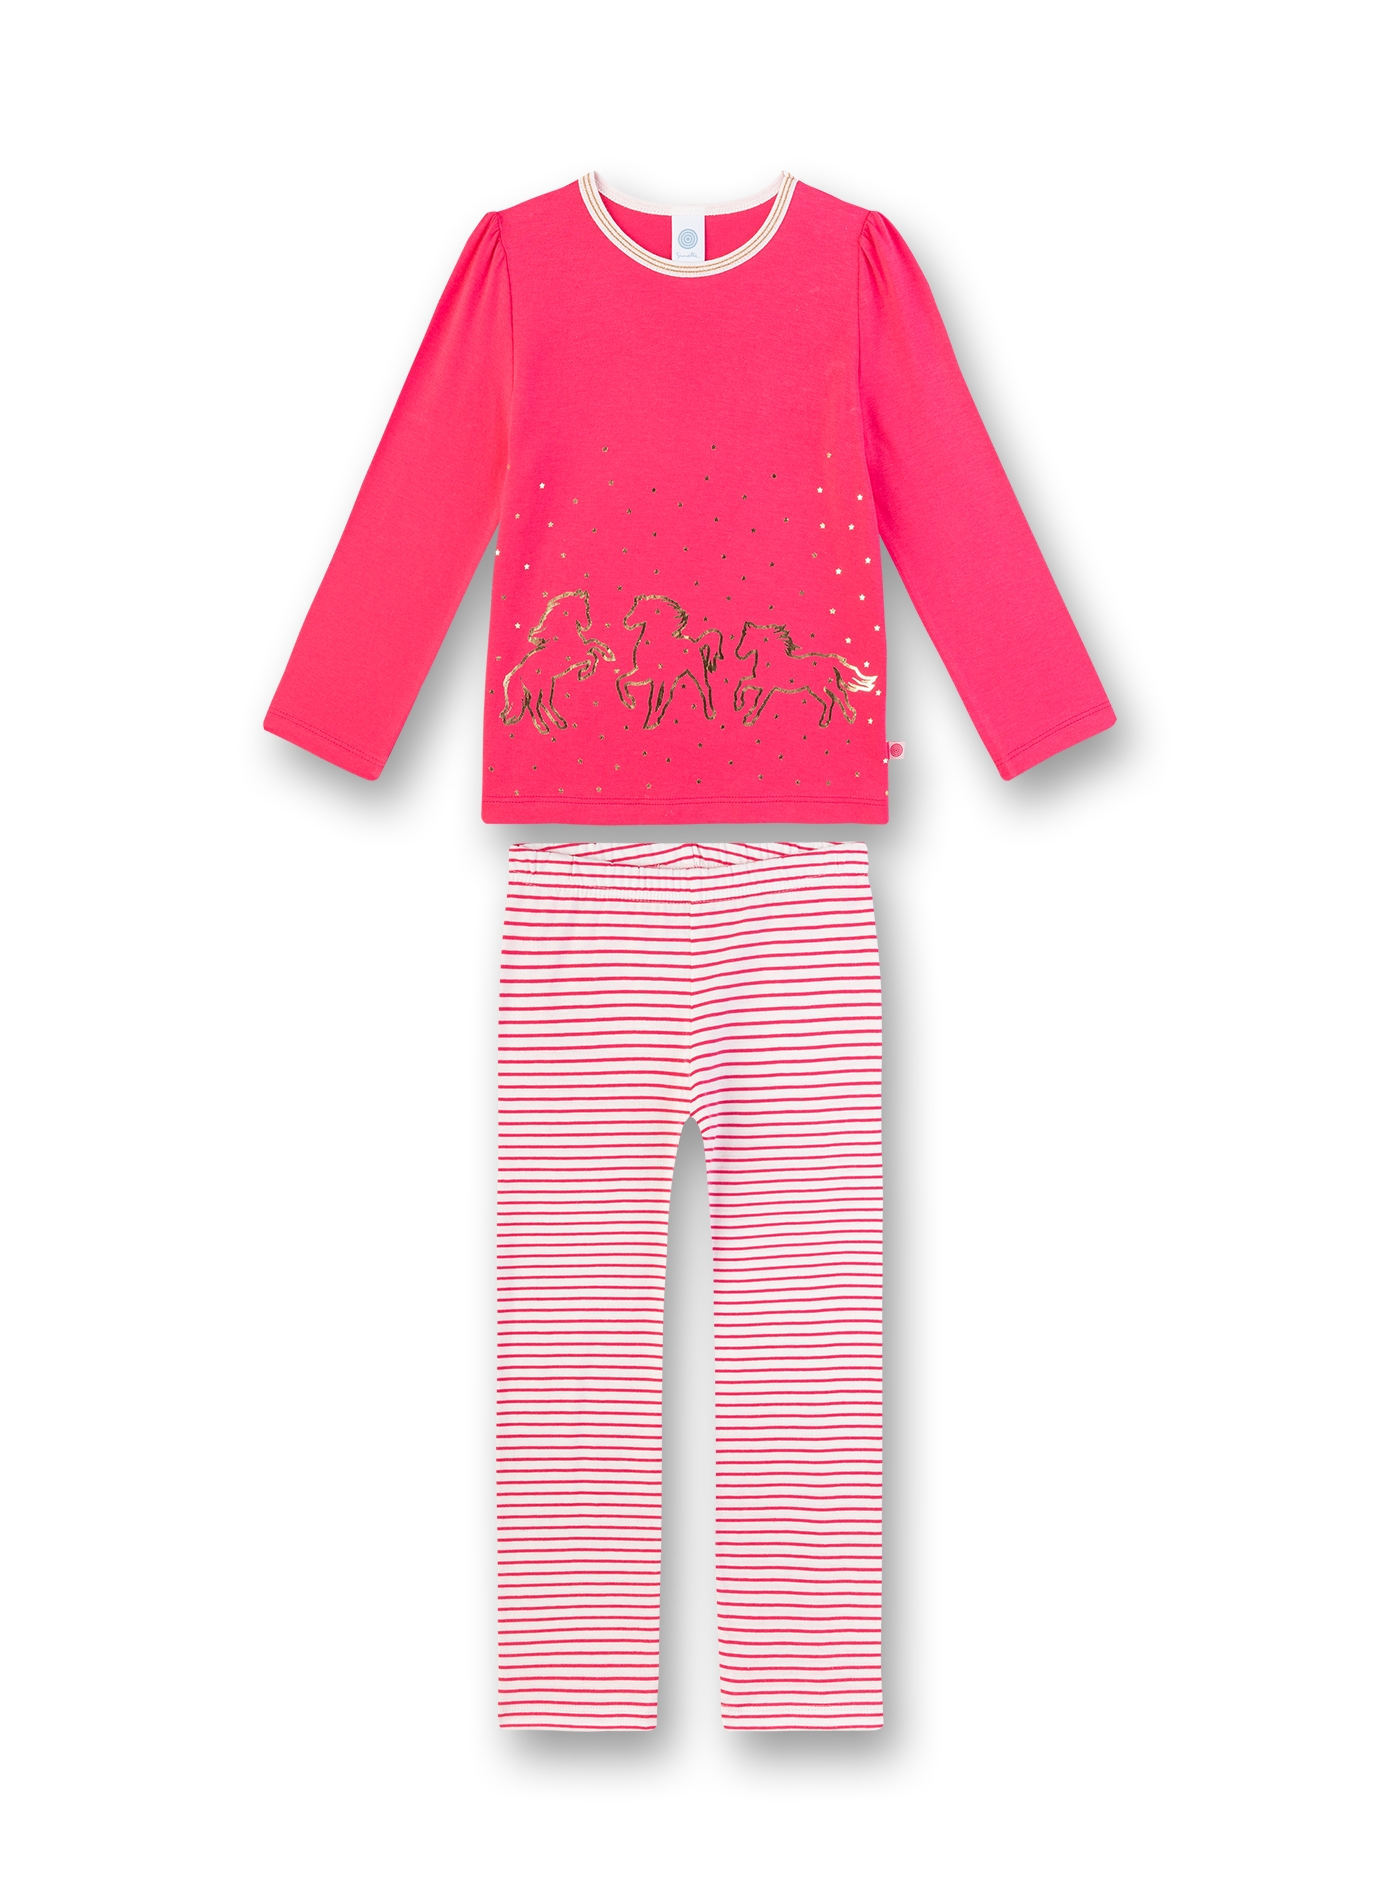 Mädchen-Schlafanzug lang Pink Horse-Power